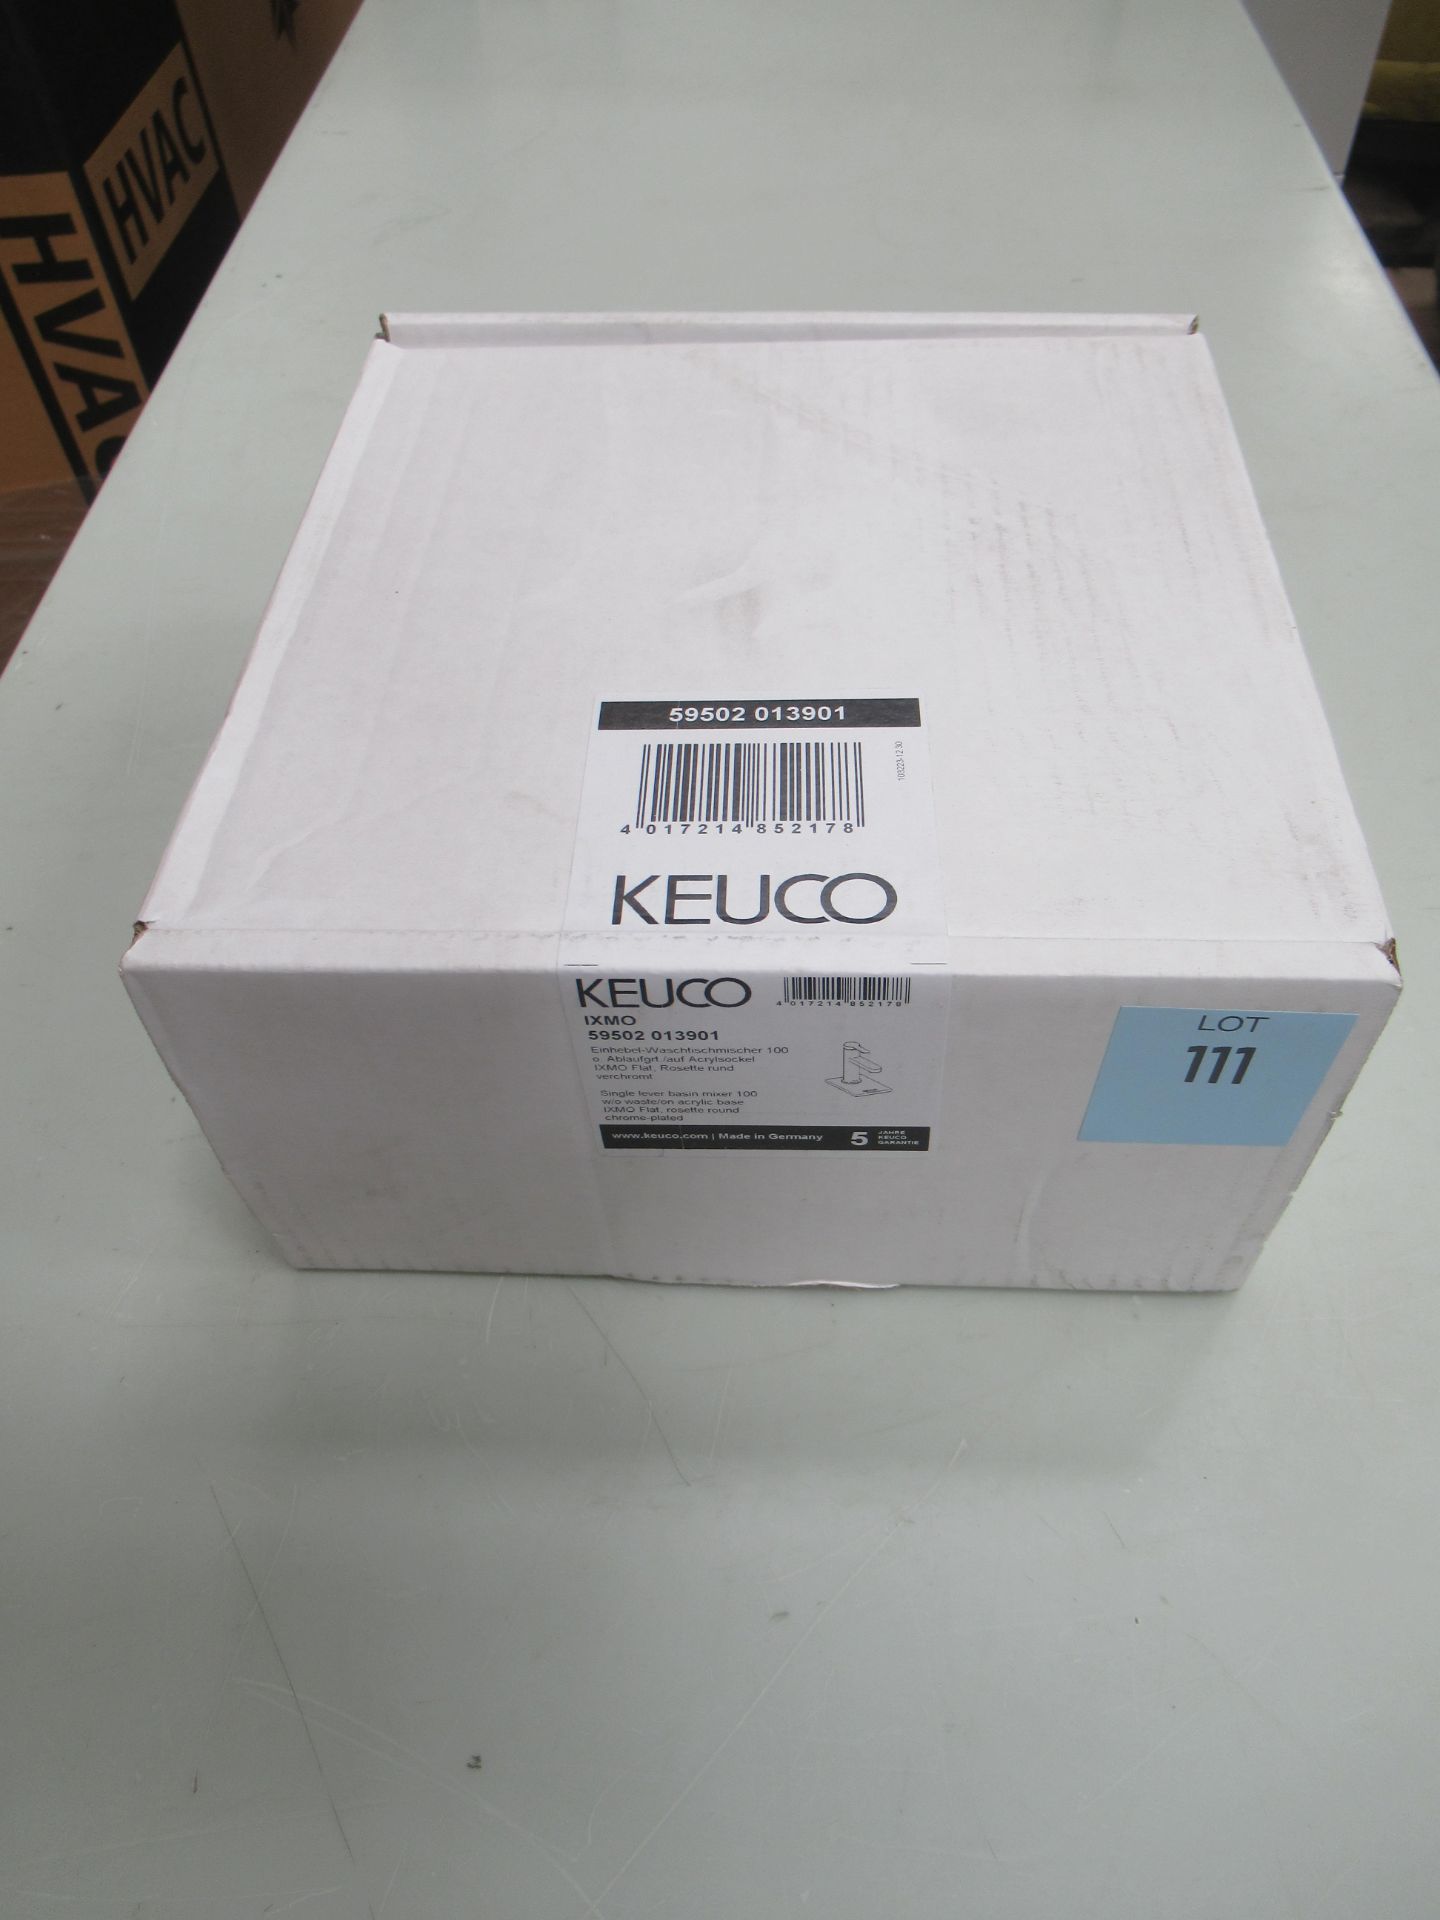 A Keuco IXMO Single Lever Basin Mixer 100-Tap, Chrome Plated, P/N 59502-013901